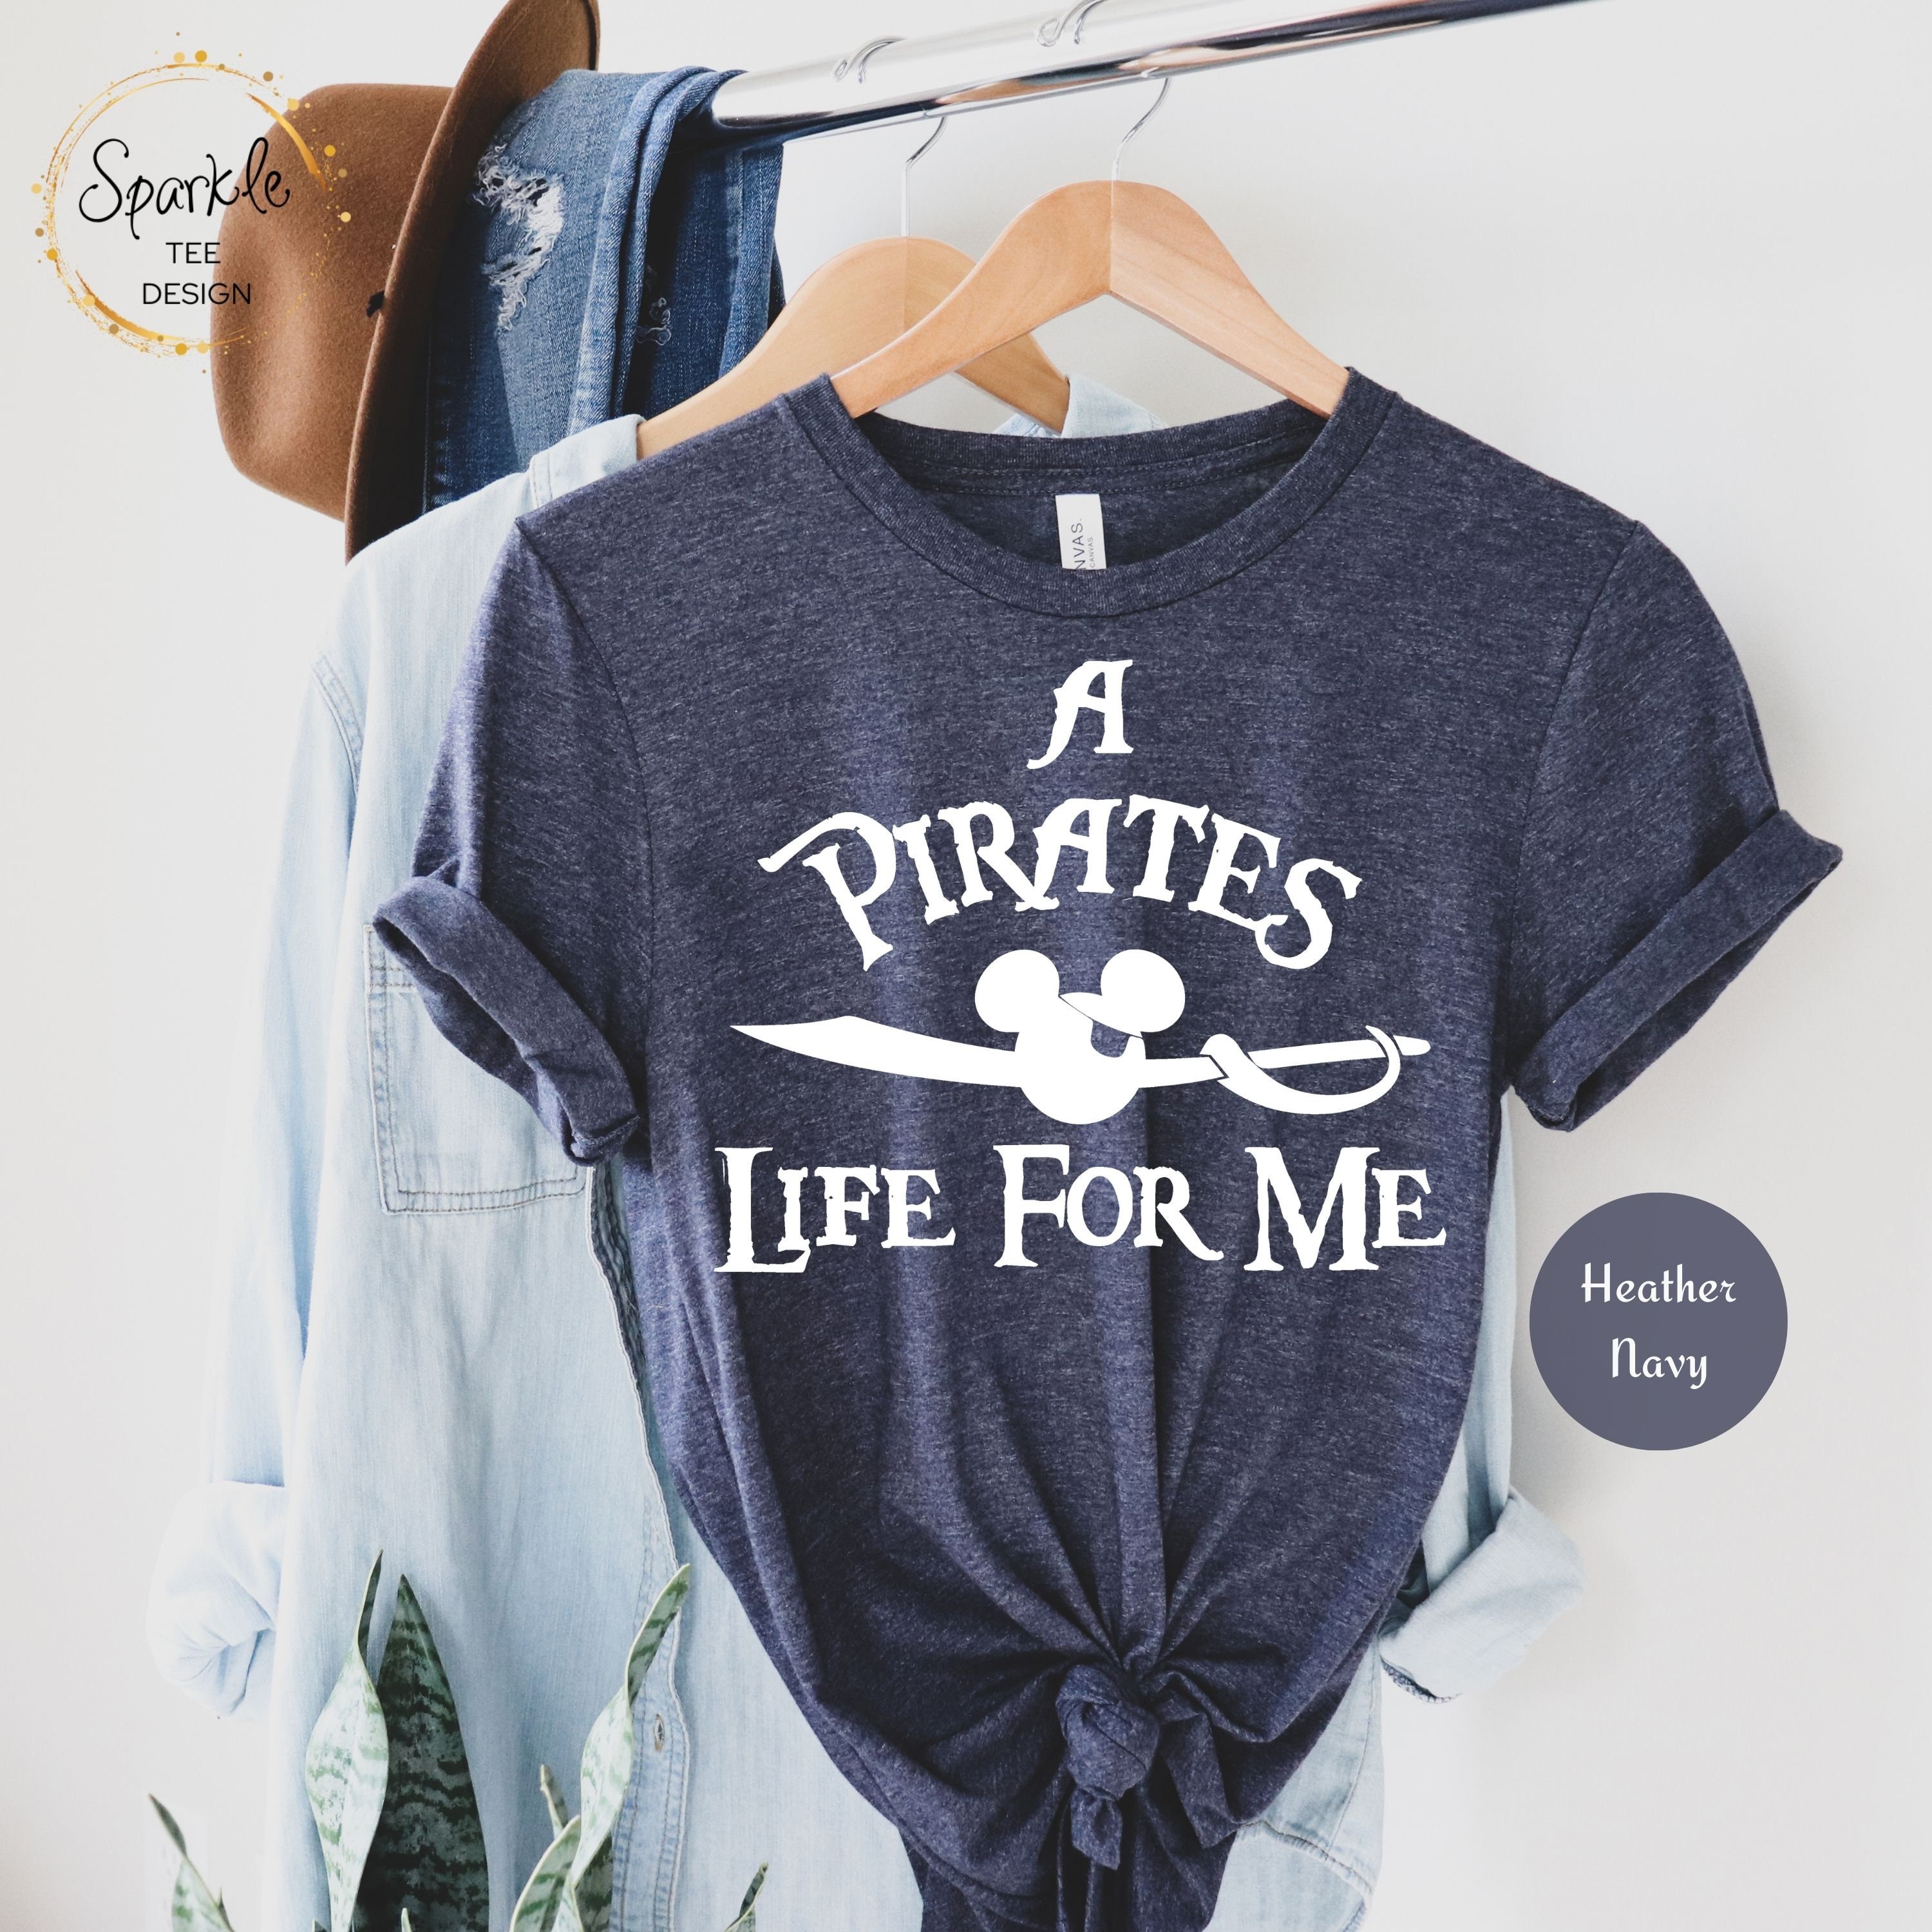 Discover Disney Cruise Pirates Shirt, A Pirates Life For Me Shirt, Pirate Night Shirts, Pirate Shirt, Pirate Mickey Shirt